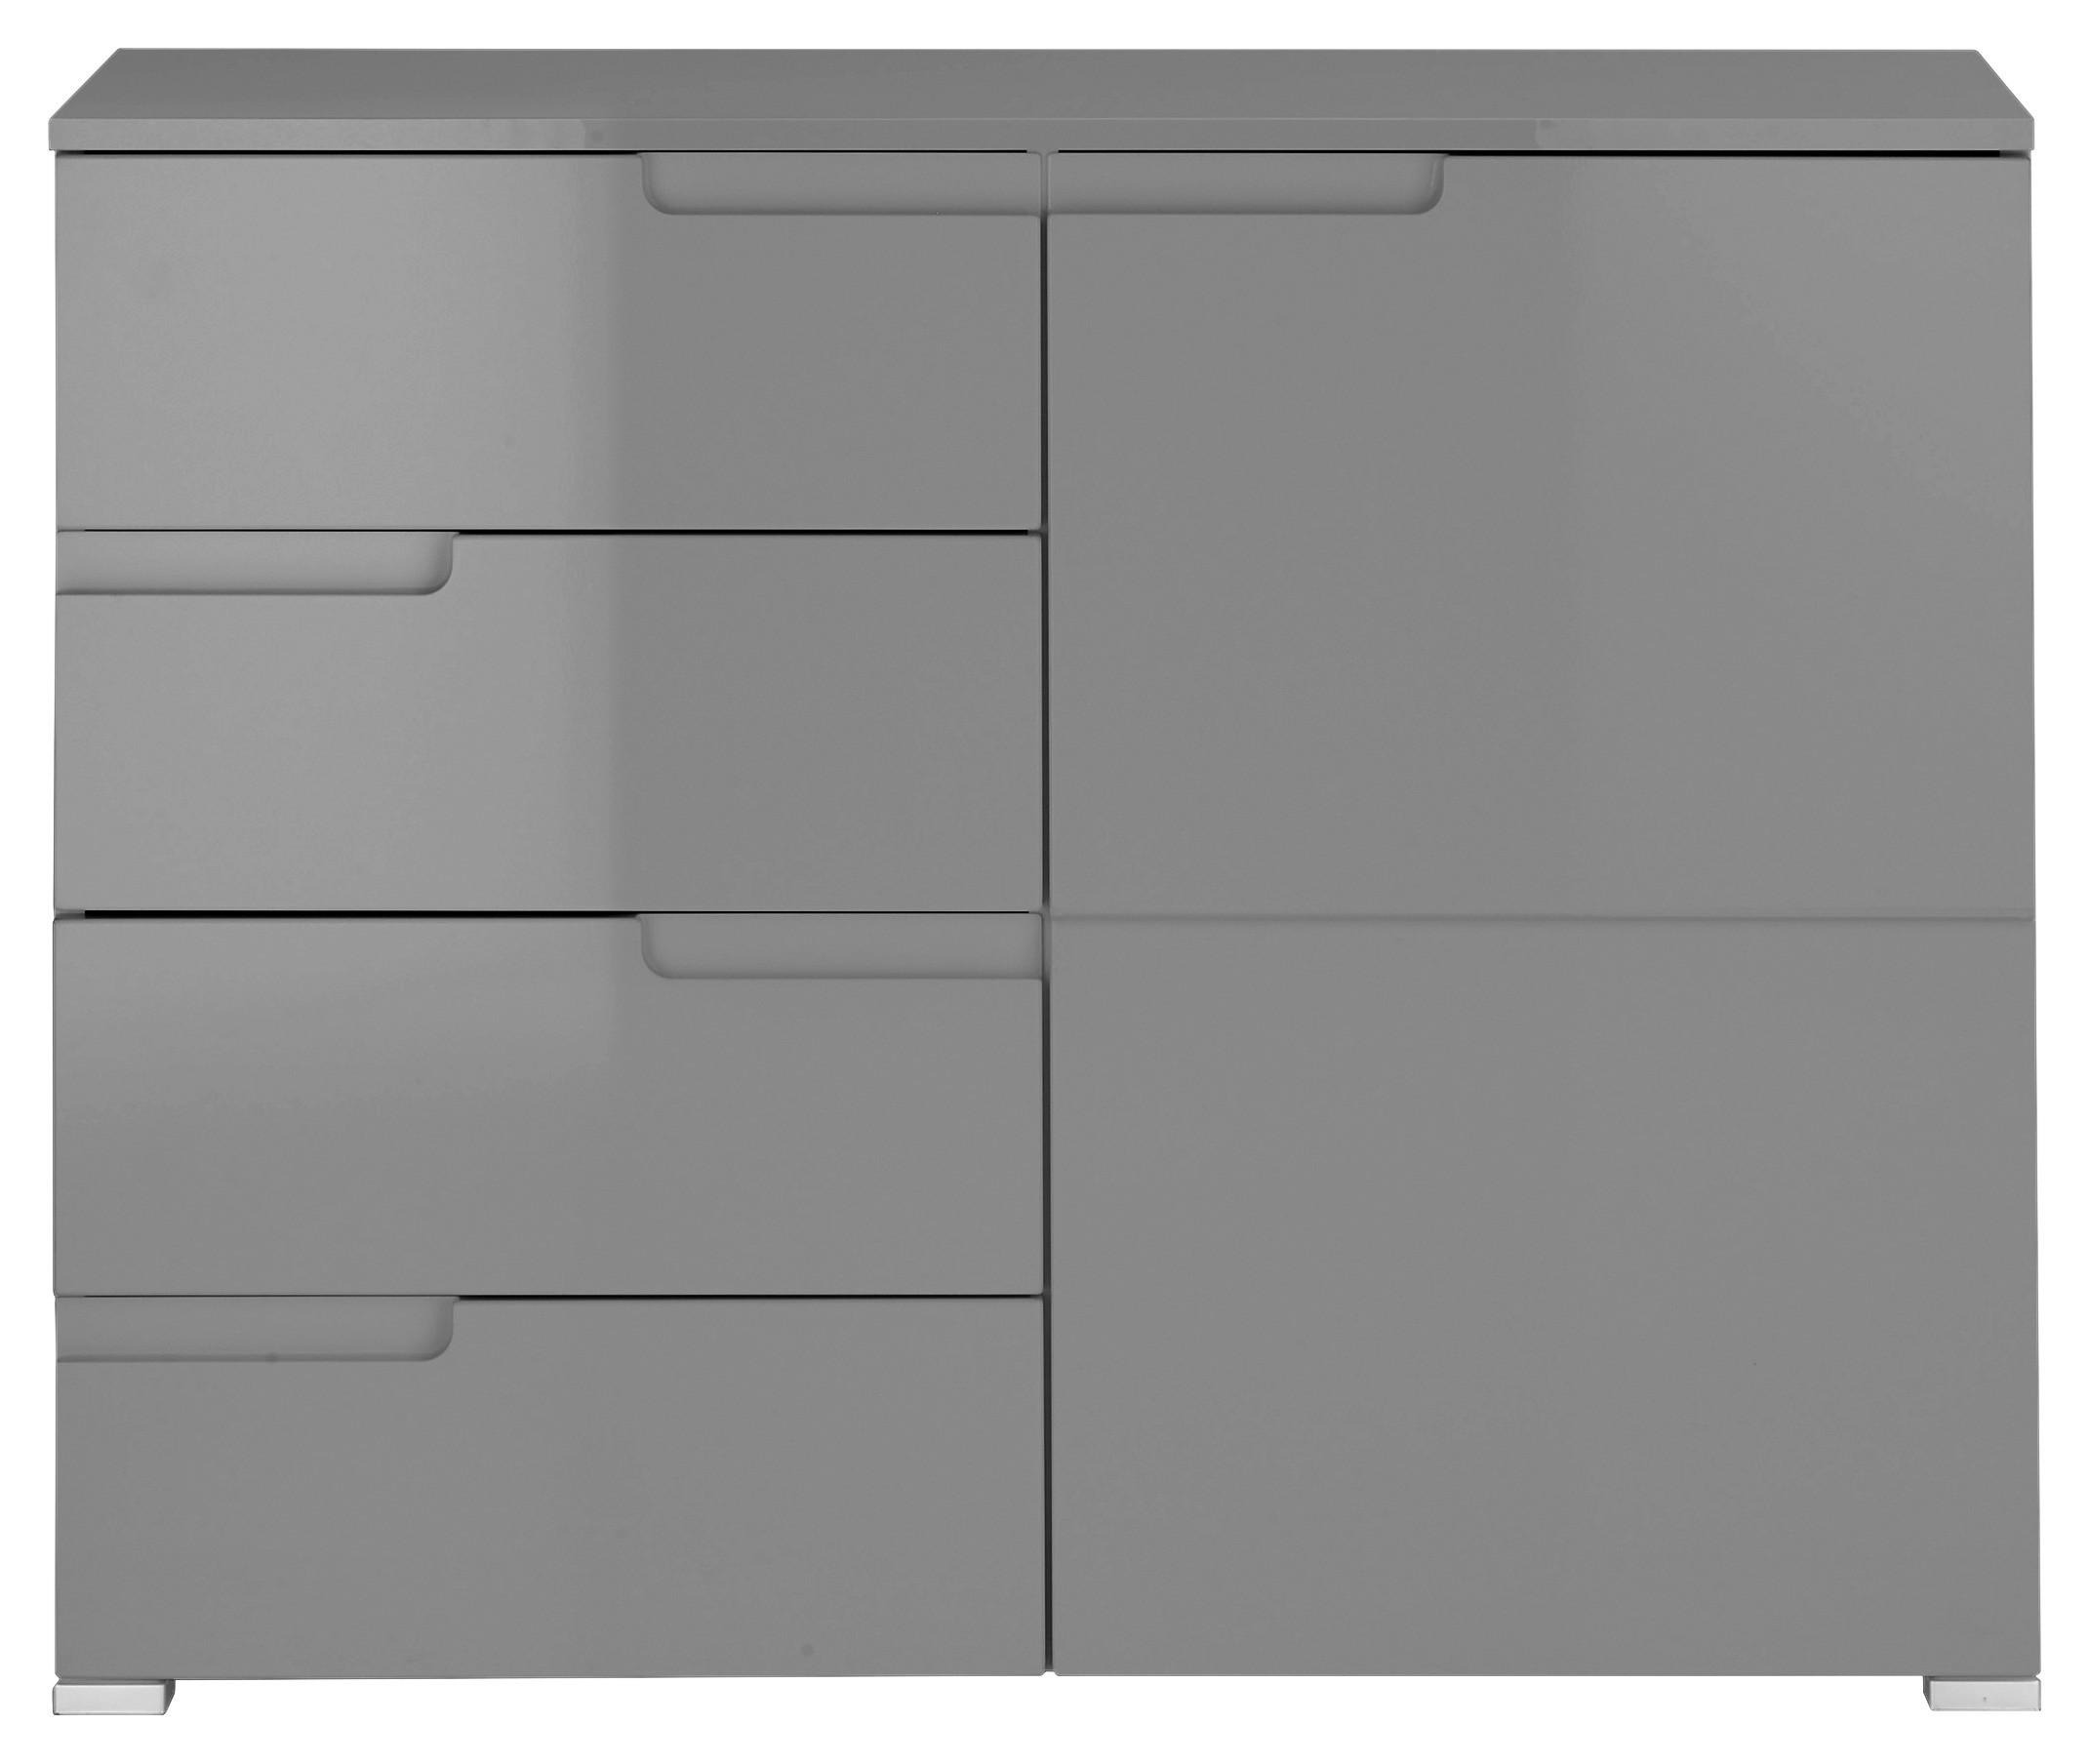 KOMMODE 100/80/40 cm  - Silberfarben/Grau, Basics, Holzwerkstoff/Kunststoff (100/80/40cm) - Carryhome